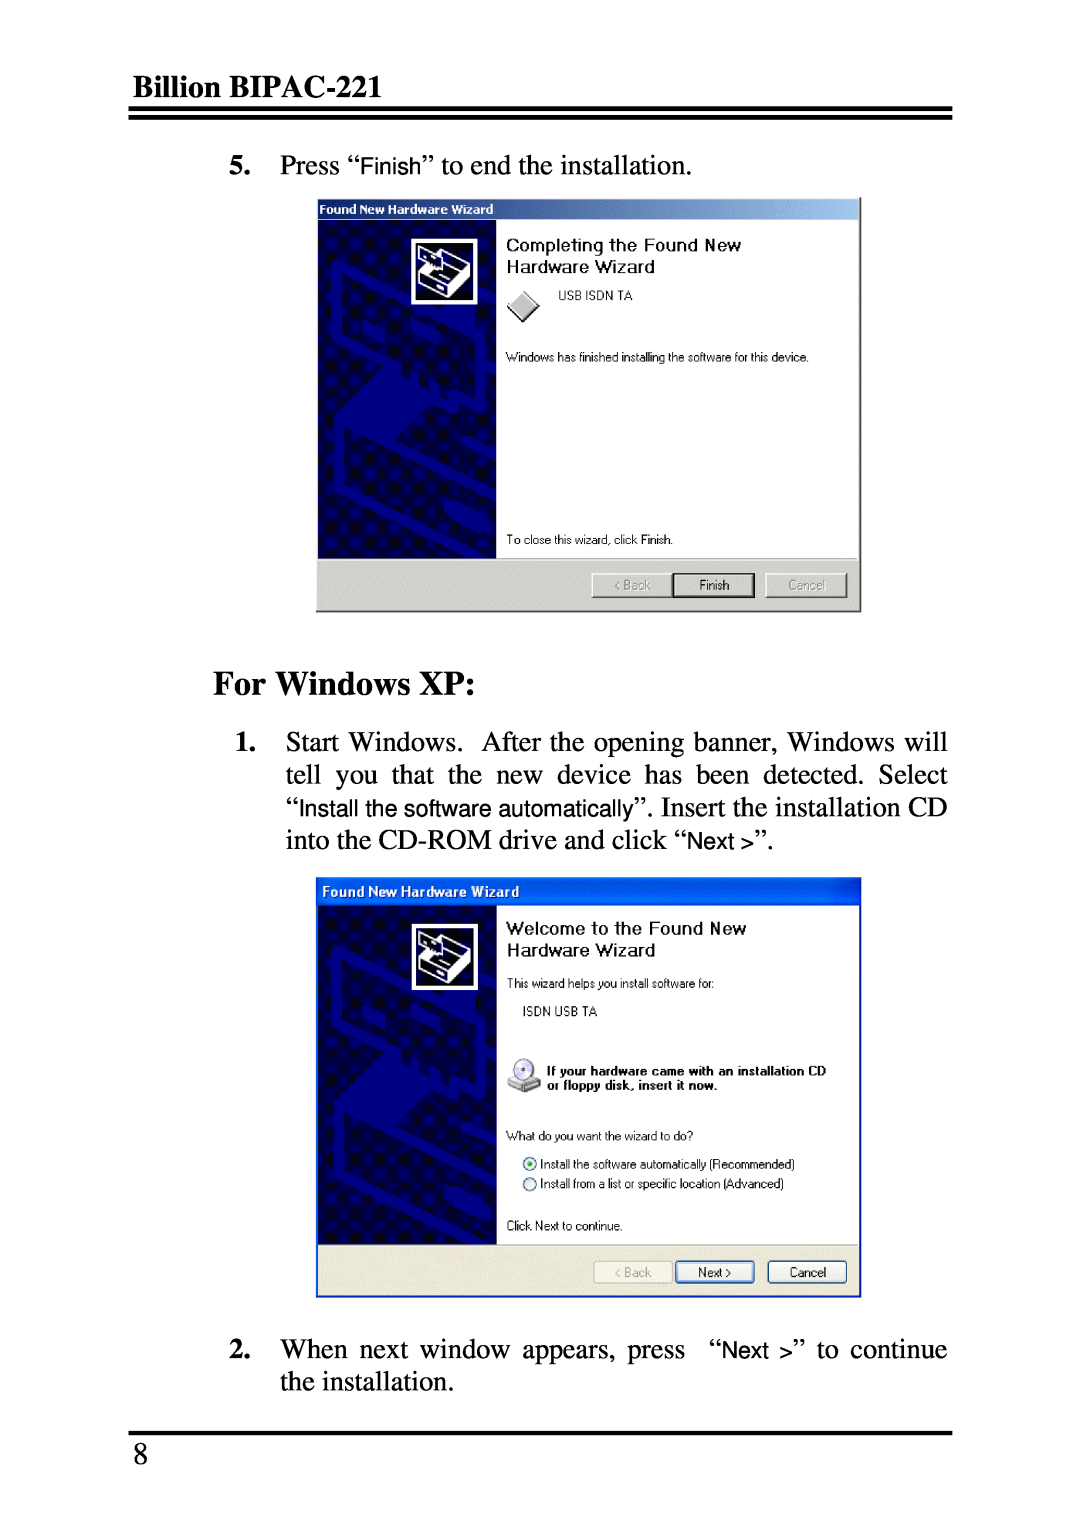 Billion Electric Company quick start For Windows XP, Billion BIPAC-221, Press “Finish” to end the installation 